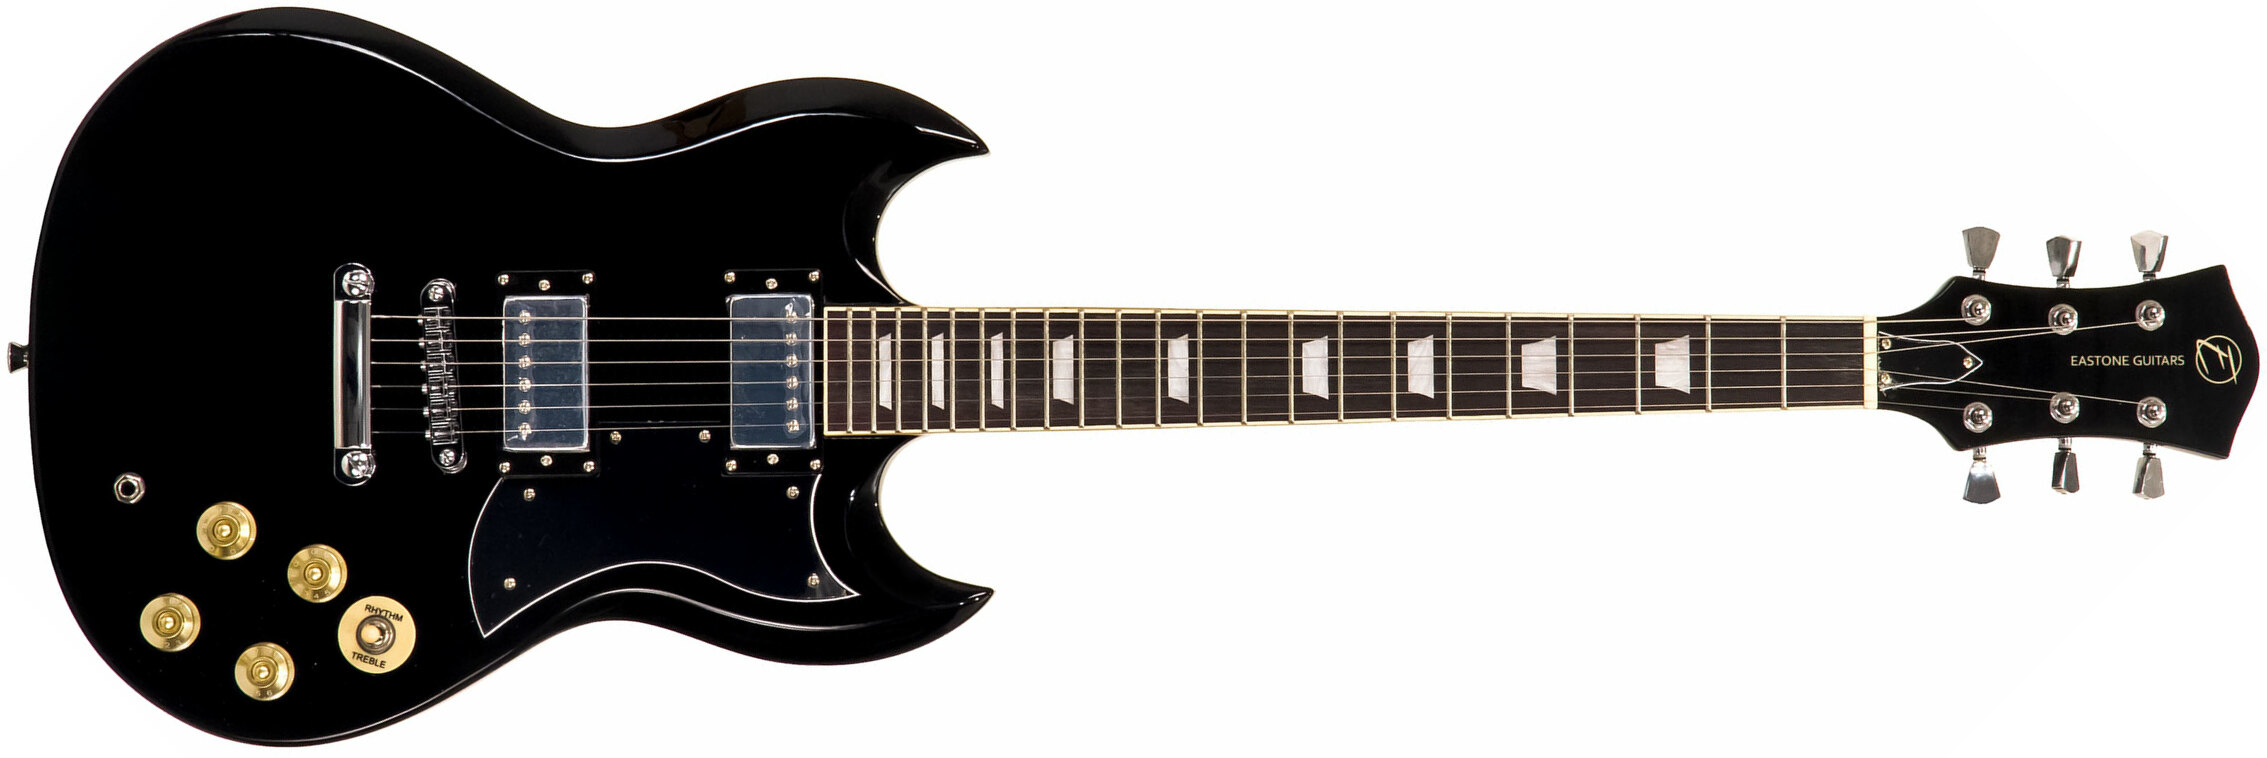 Eastone Sdc70 Hh Ht Pur - Black - Retro rock electric guitar - Main picture